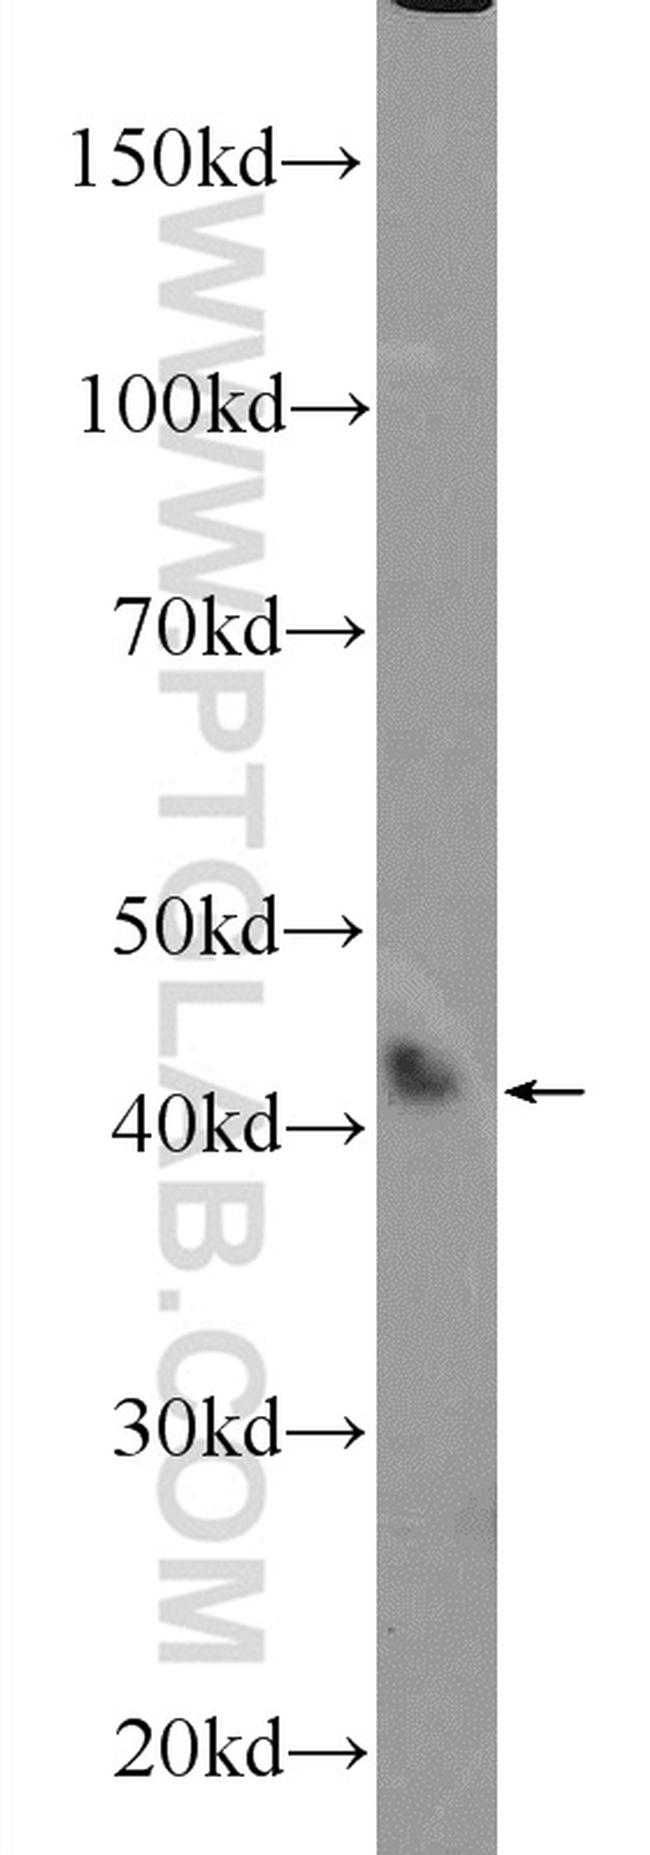 HEXIM2 Antibody in Western Blot (WB)